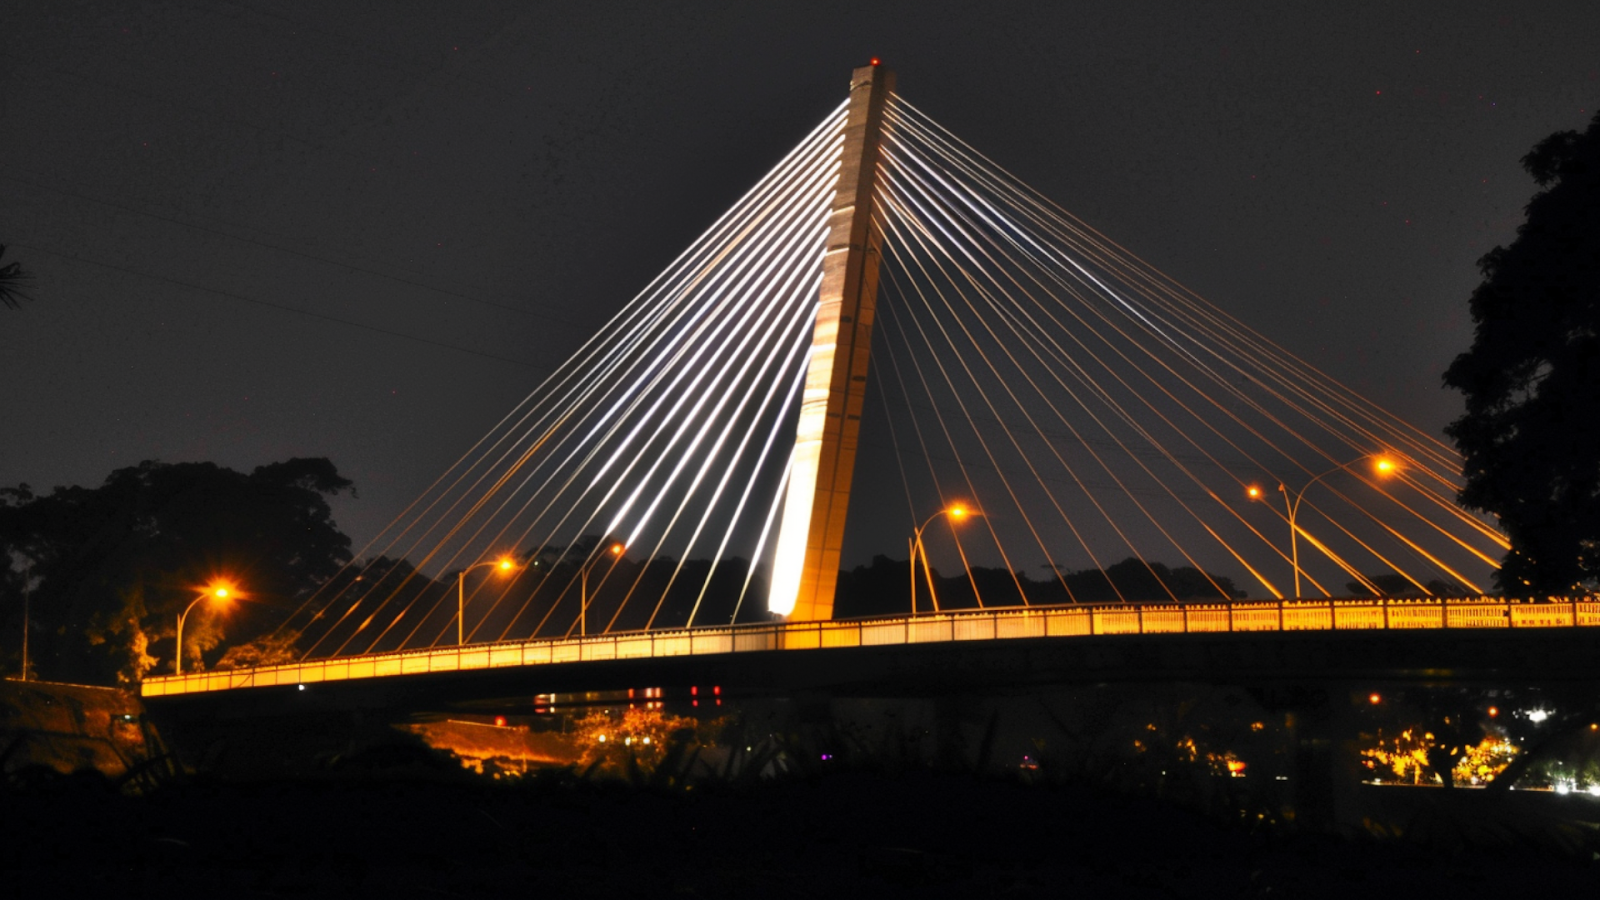 The Ponte Estaida Morumbi in Sao Paulo, Brazil lit up at night